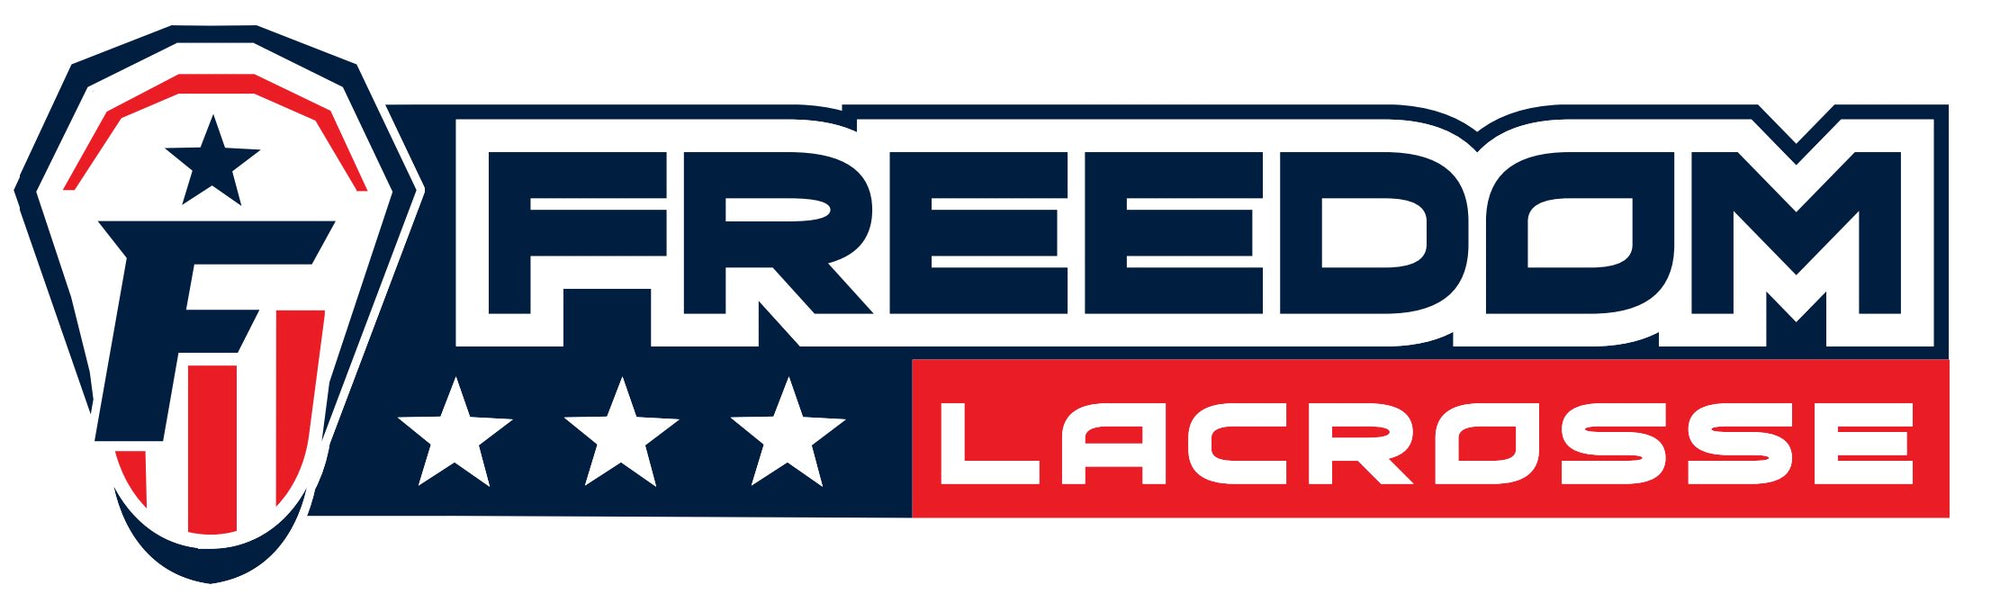 Freedom Lacrosse Team Store